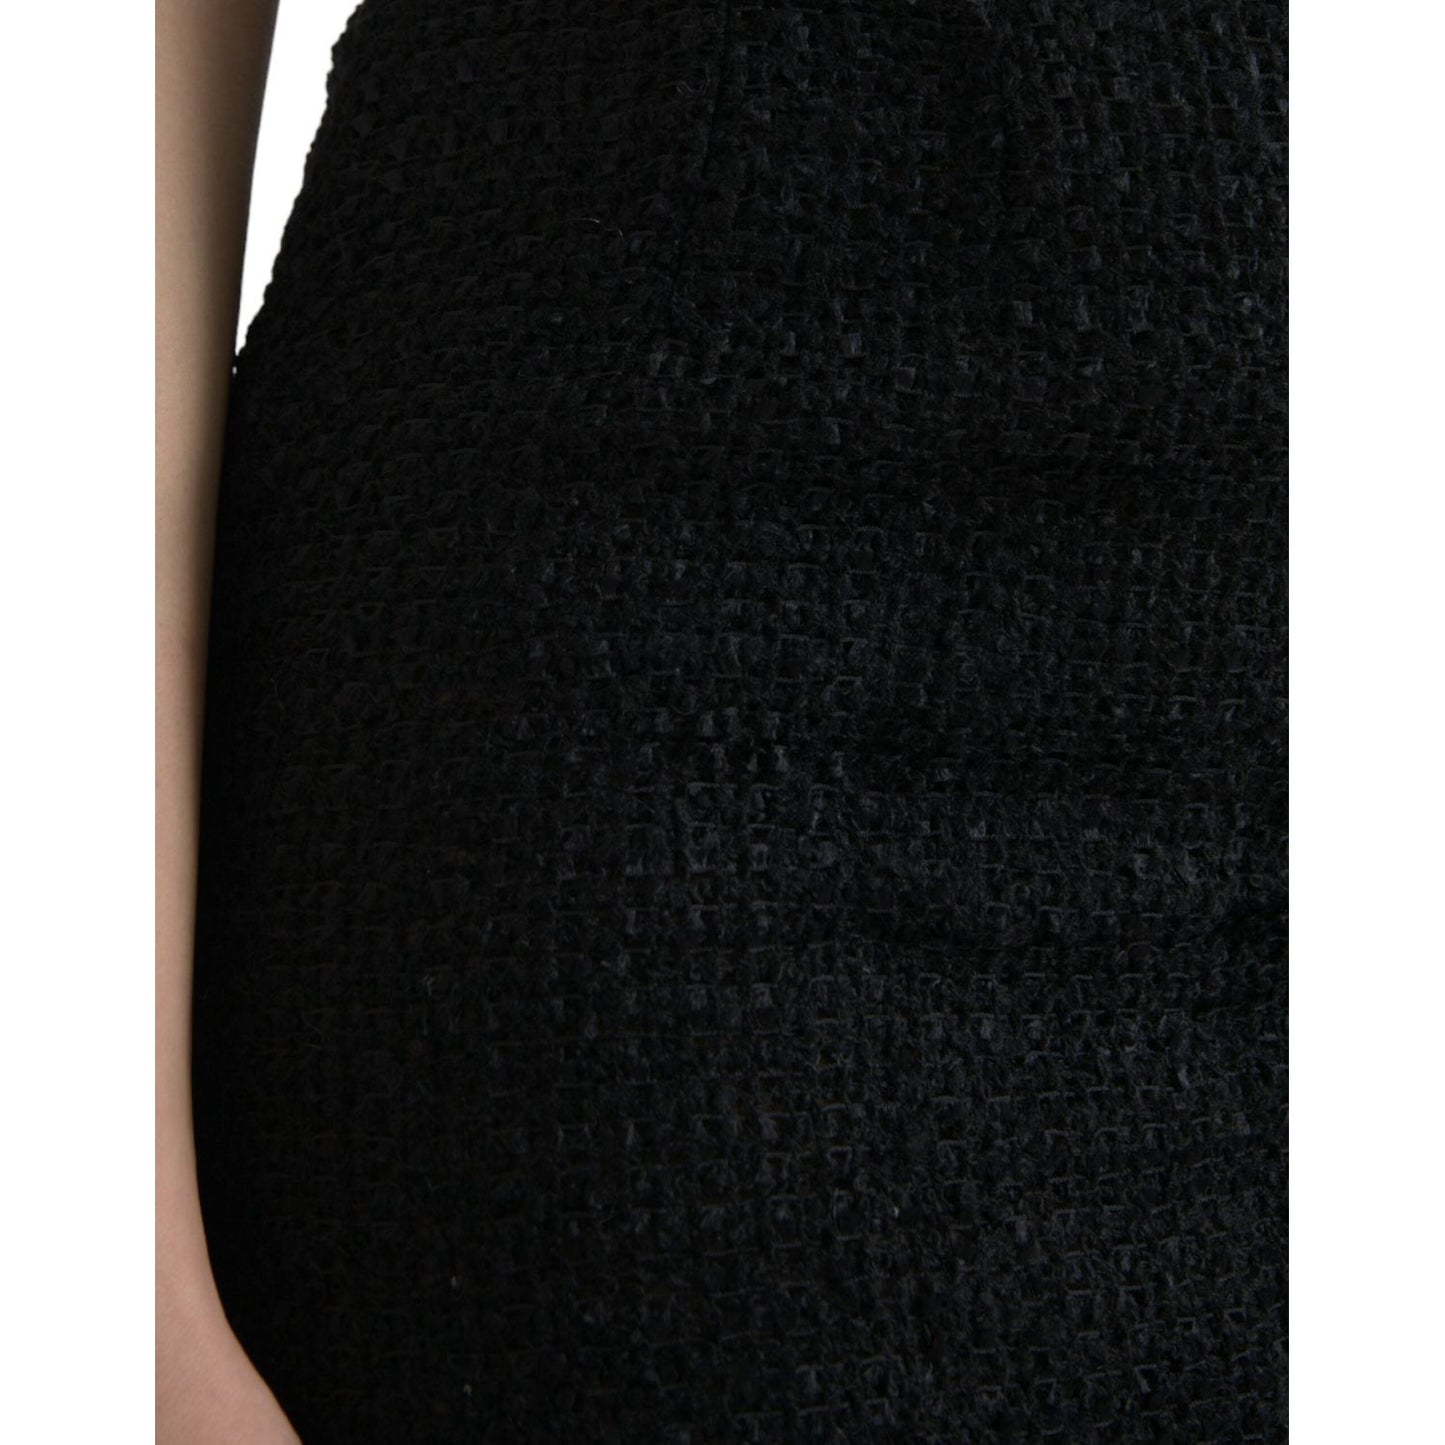 Dolce & Gabbana Elegant High Waist Midi Skirt elegant-high-waist-midi-skirt